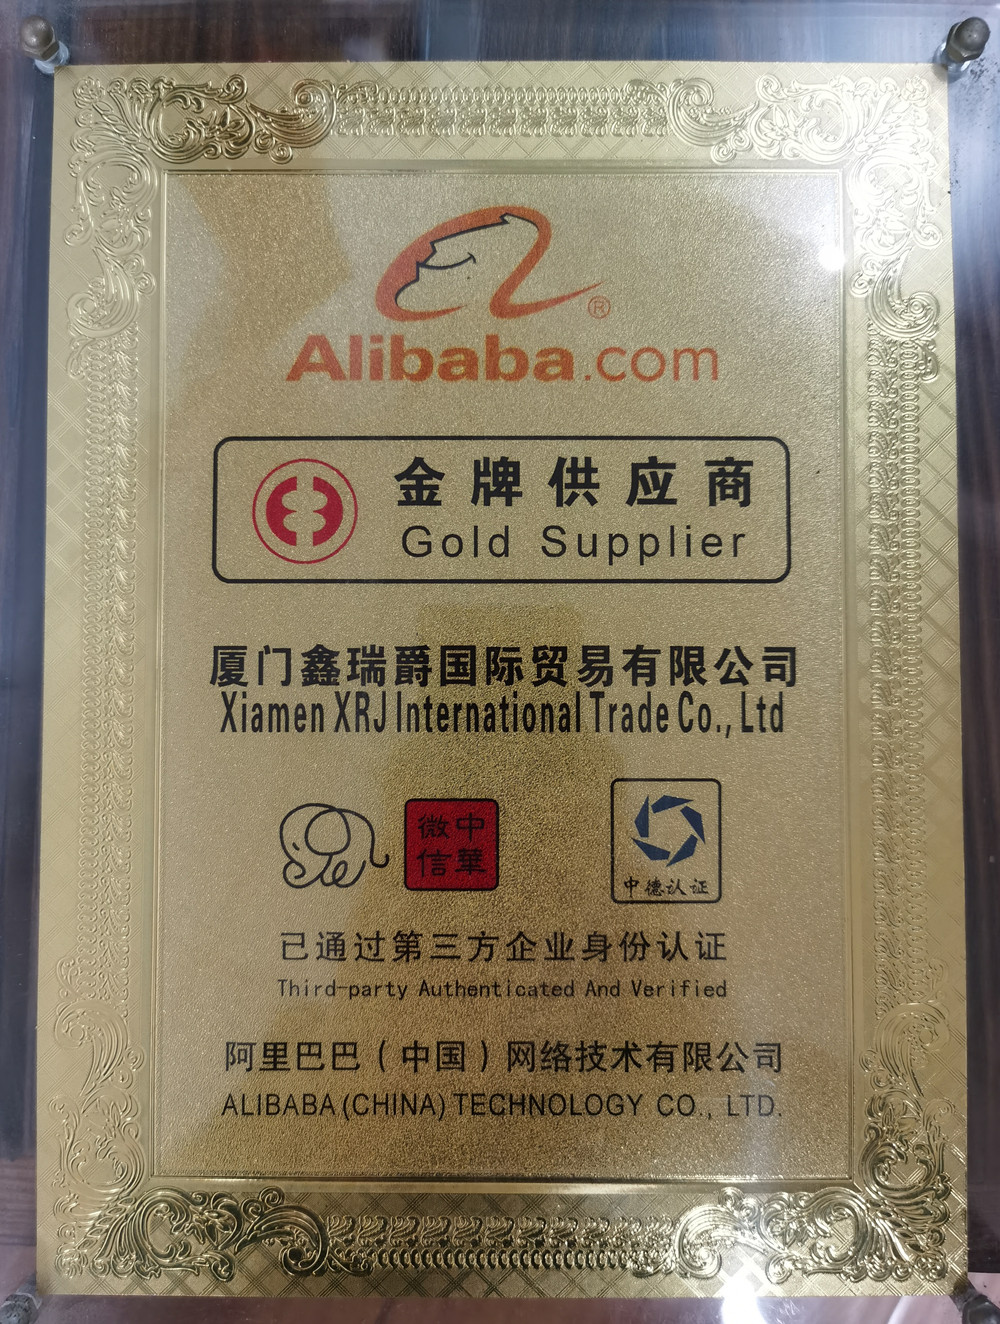 Alibaba Glod Supplier